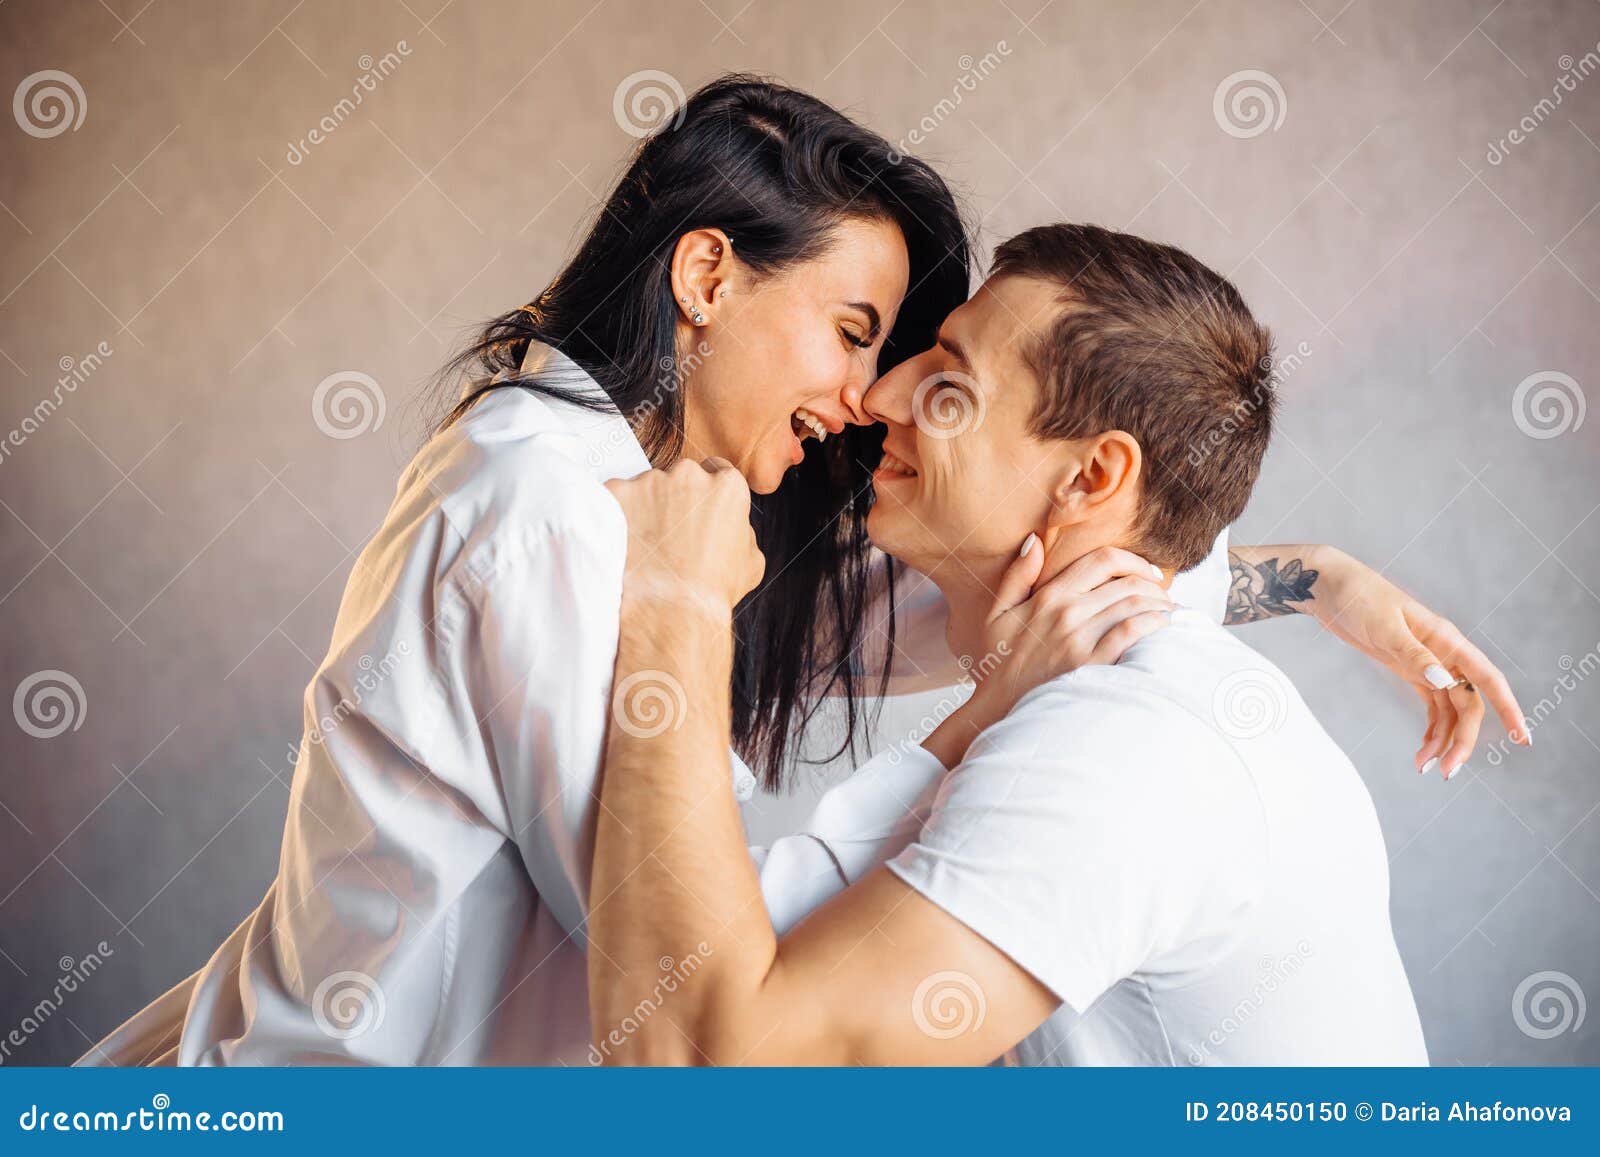 Beautiful Passionate Couple Having Sex on the image image